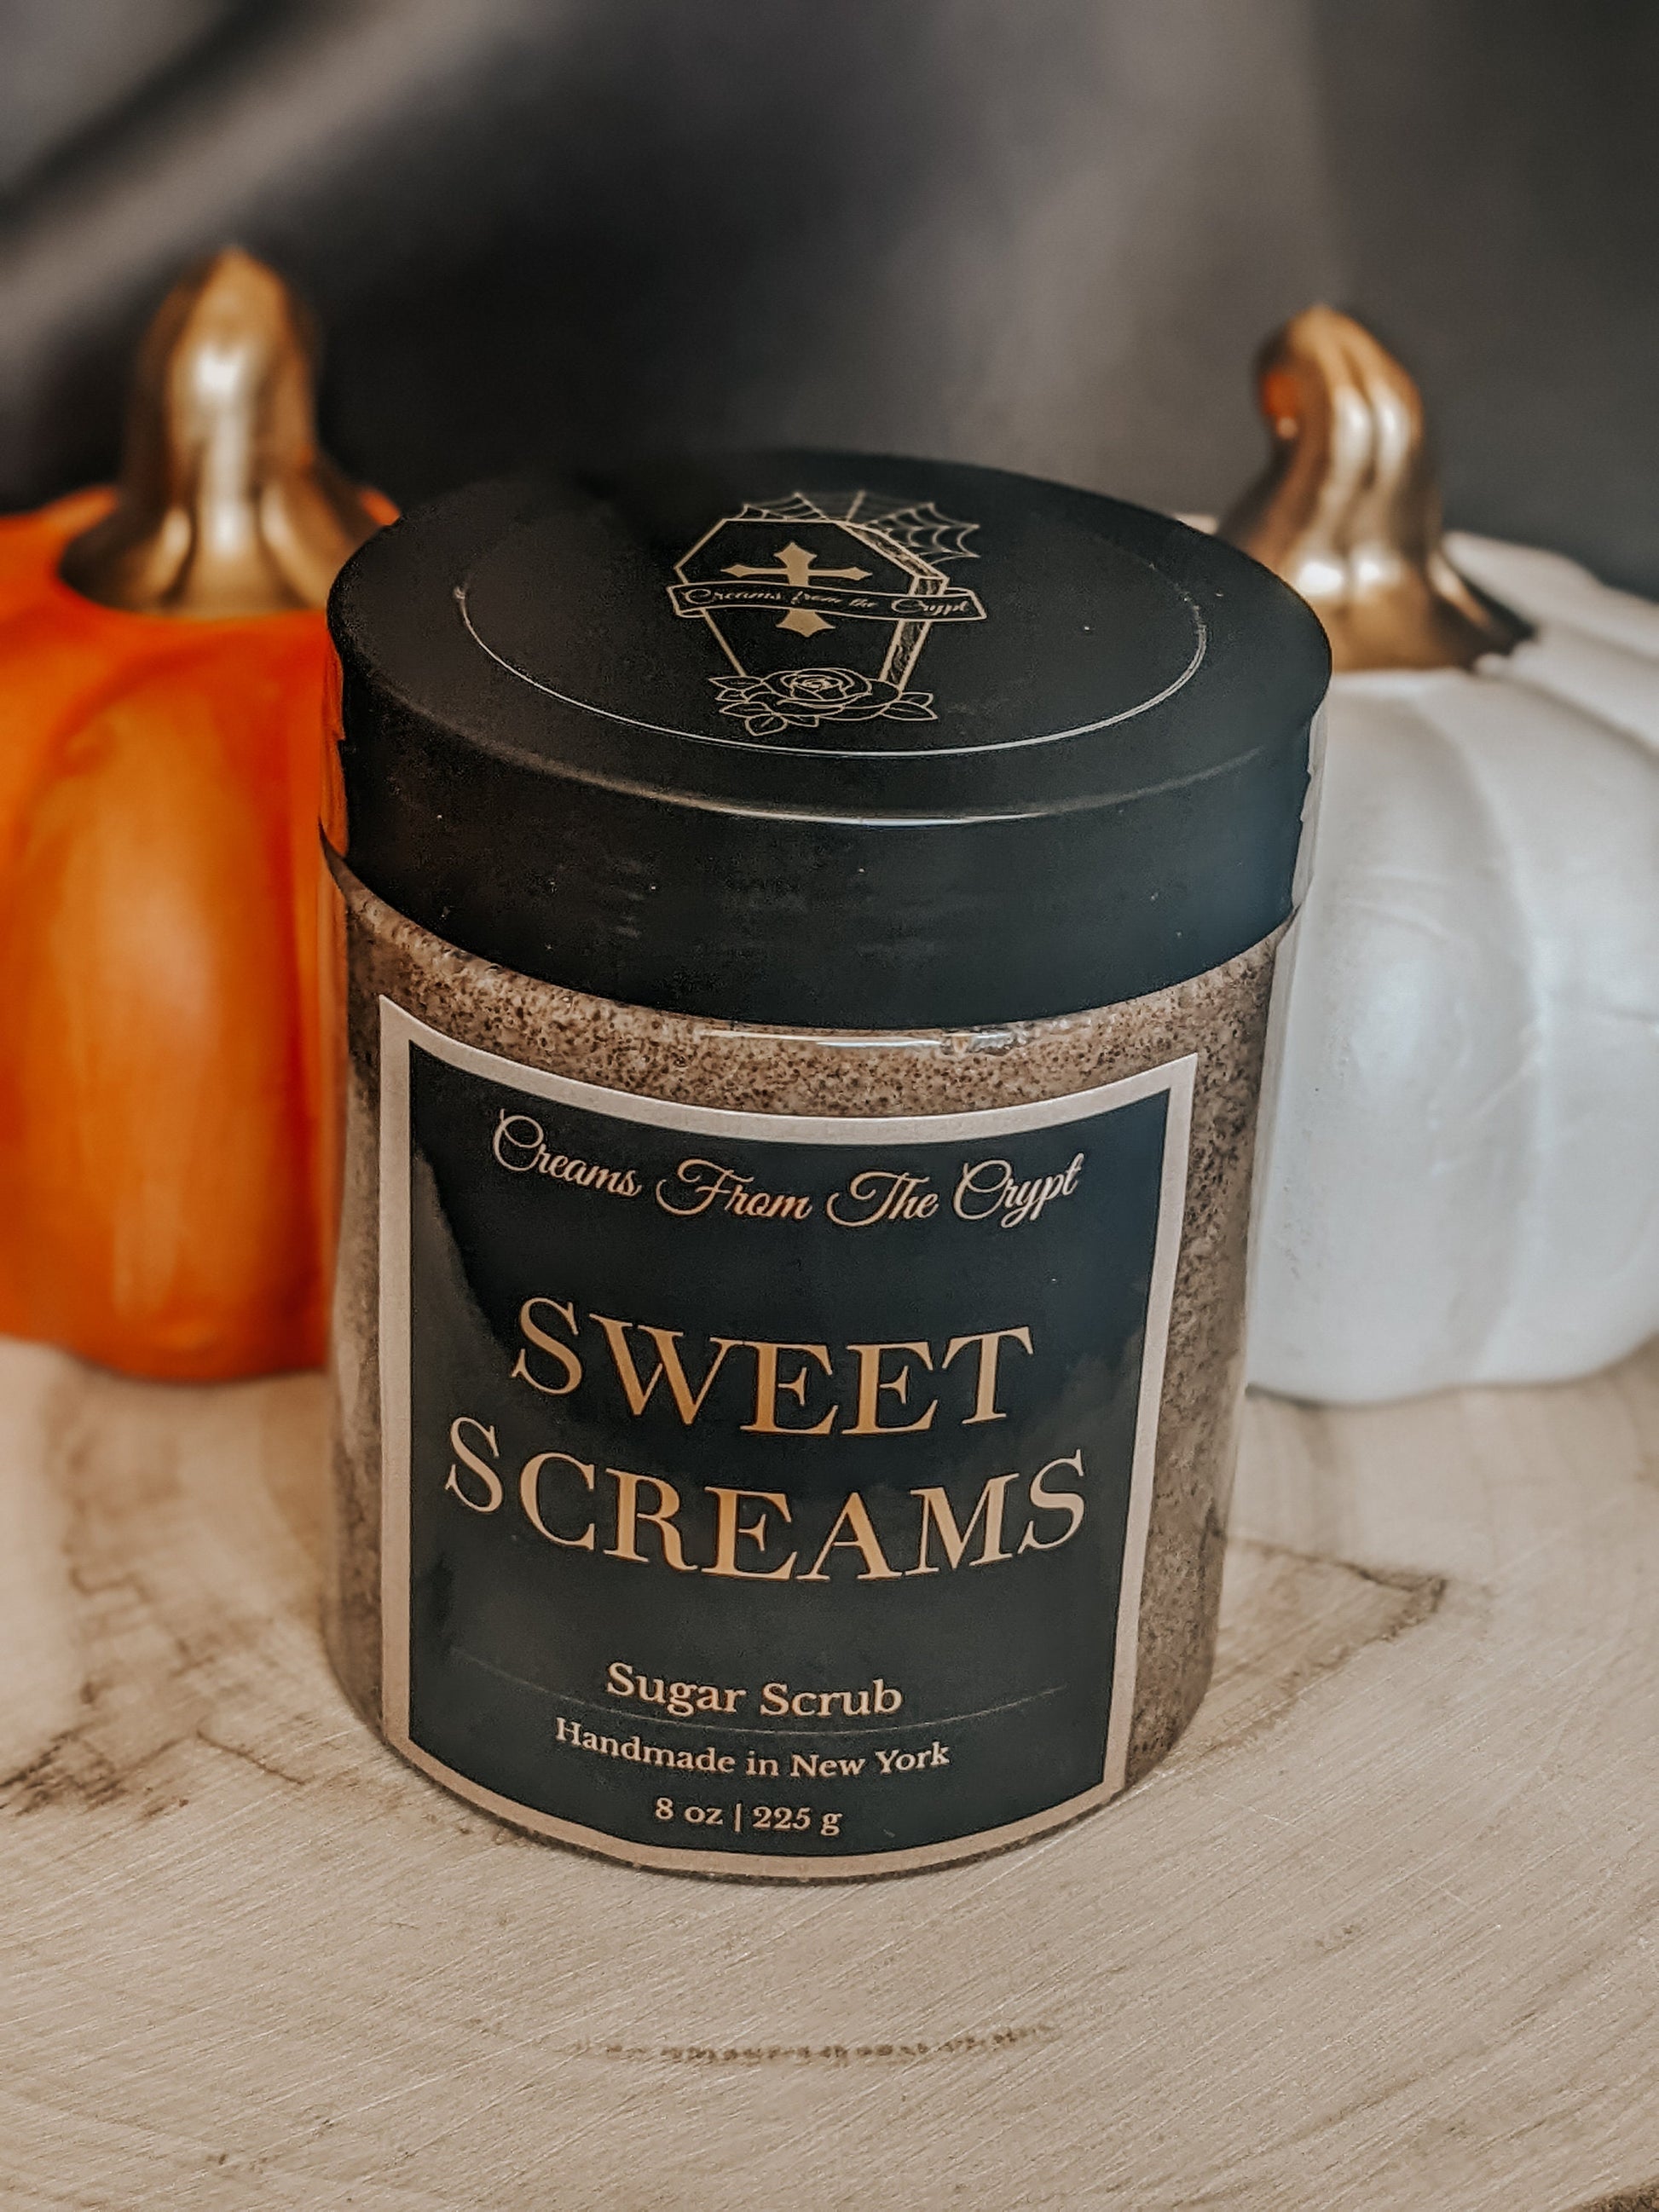 SWEET SCREAMS - Pumpkin cheesecake Scented Sugar Scrub, Vegan skincare, Exfoliate, Shea, Mango Butter, Body Scrub, Fall/Food Fragrance, Gift